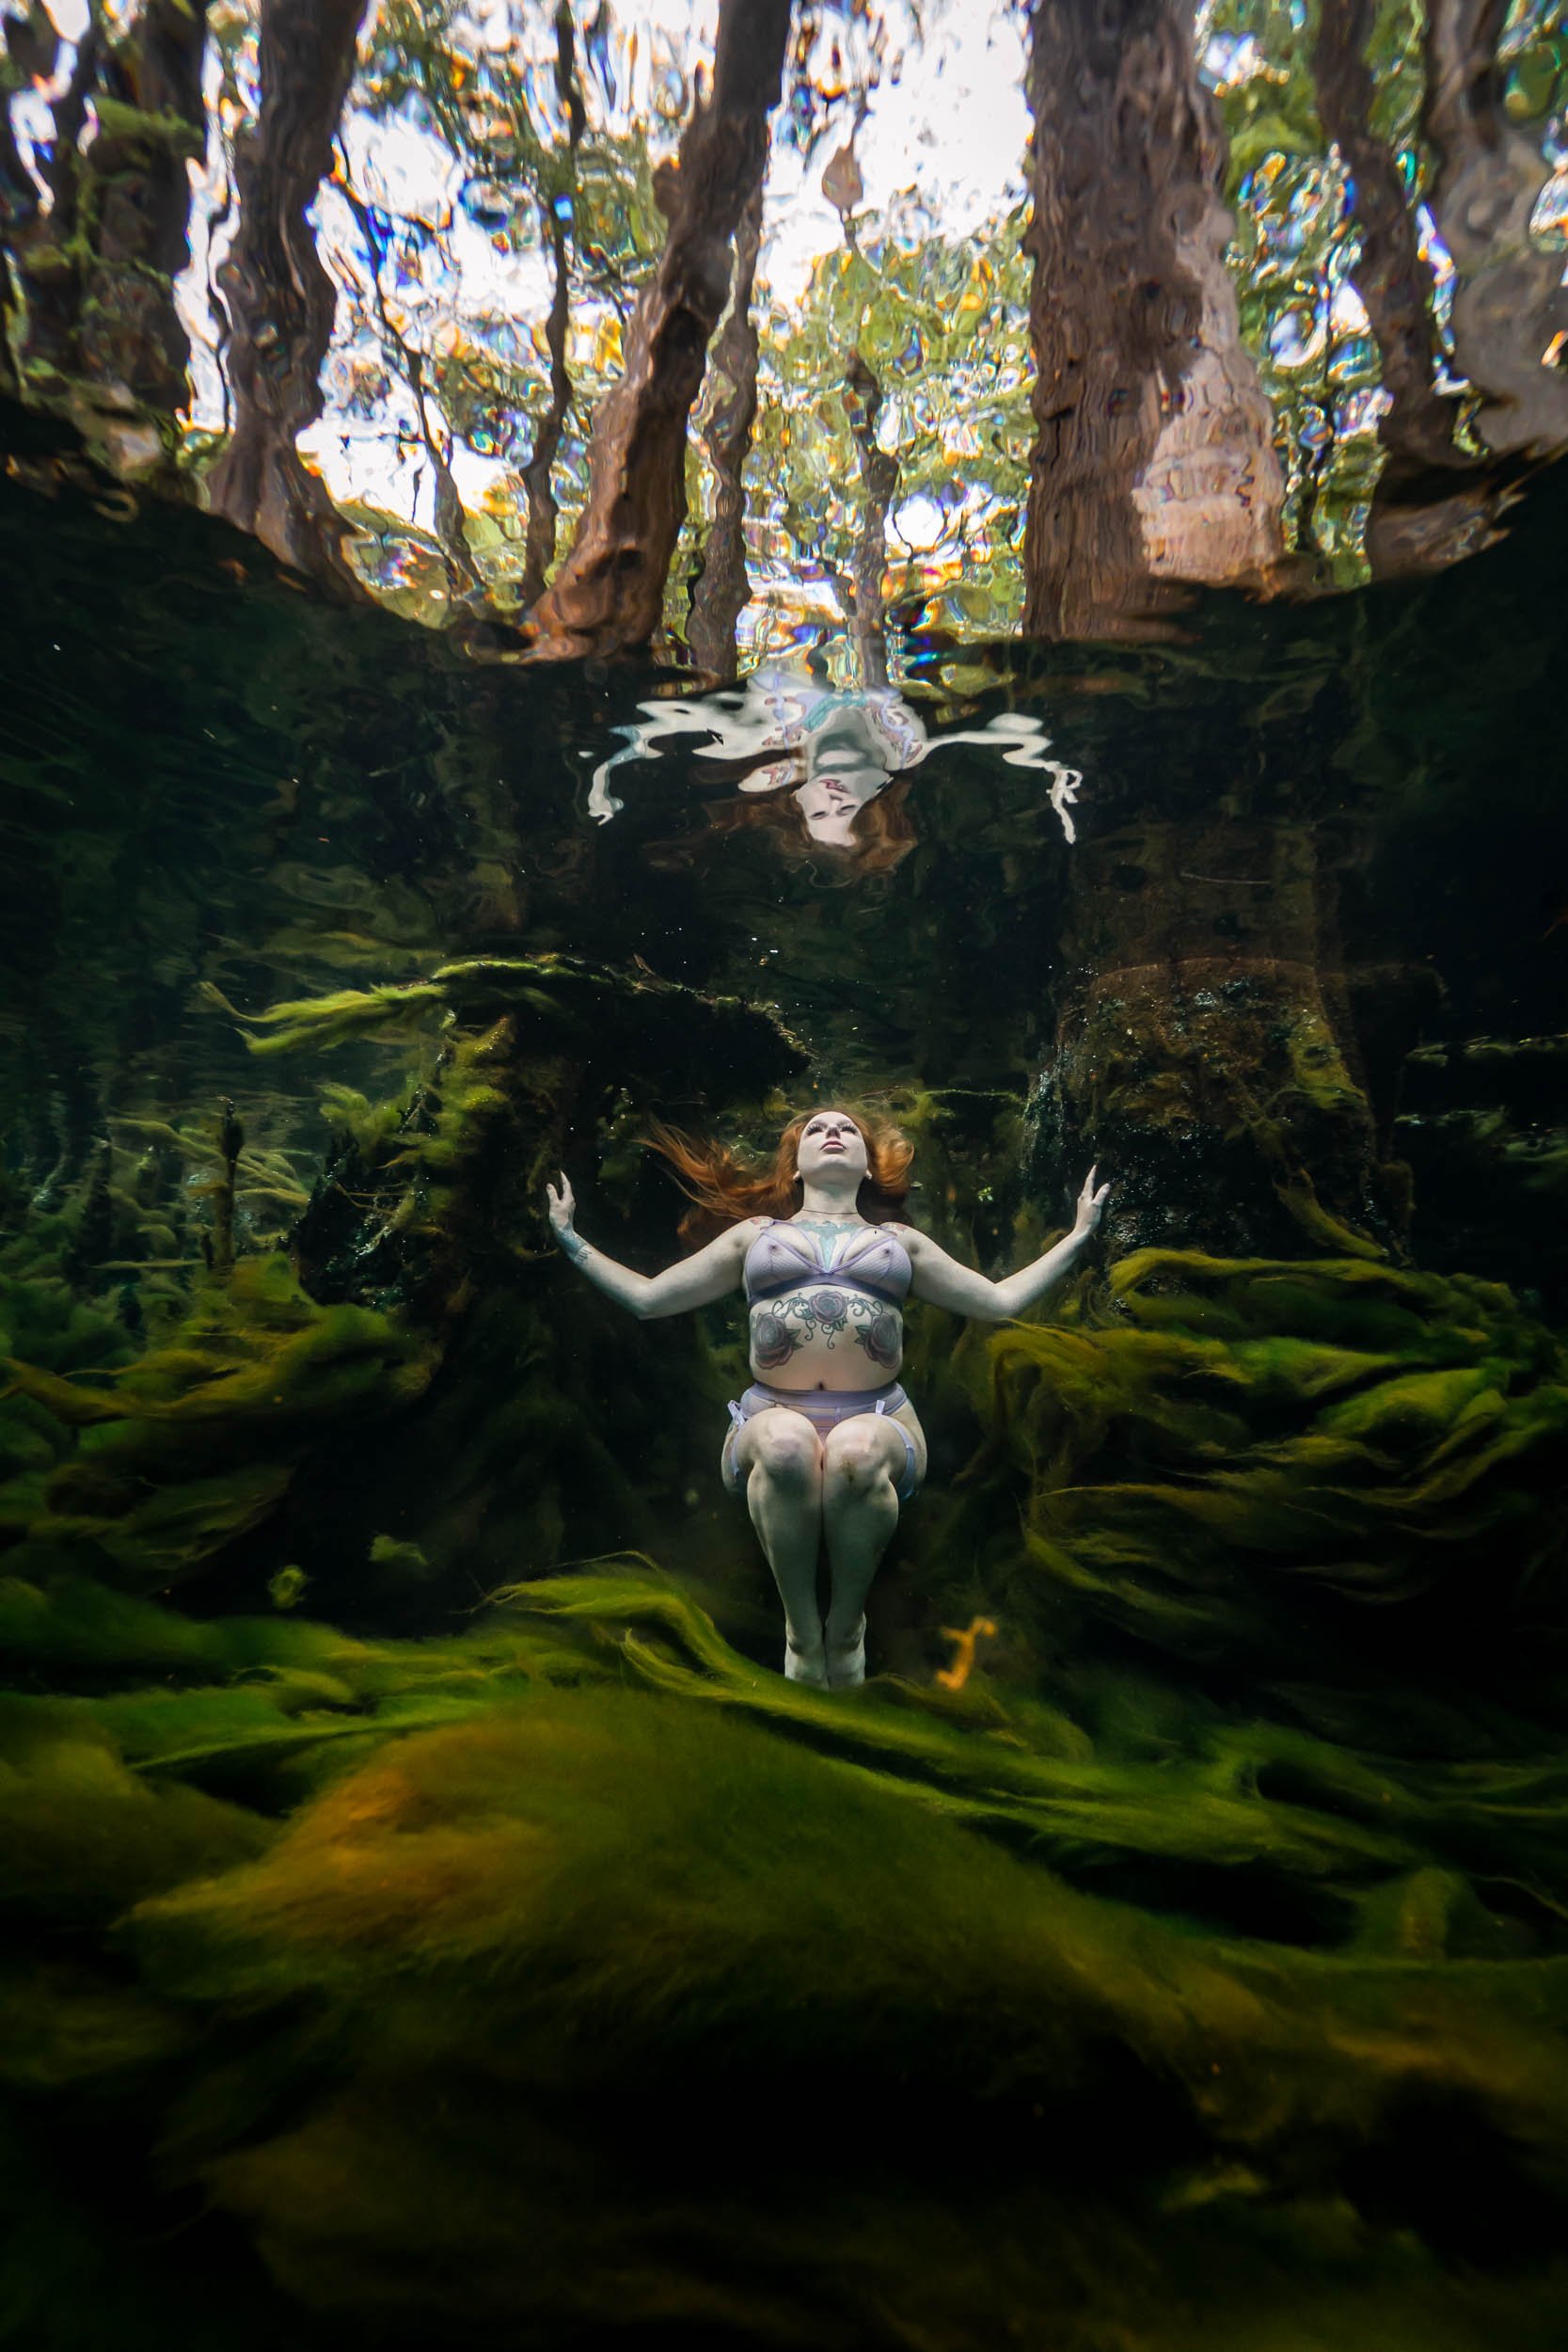 Underwater model Aimee posing in the seagrass